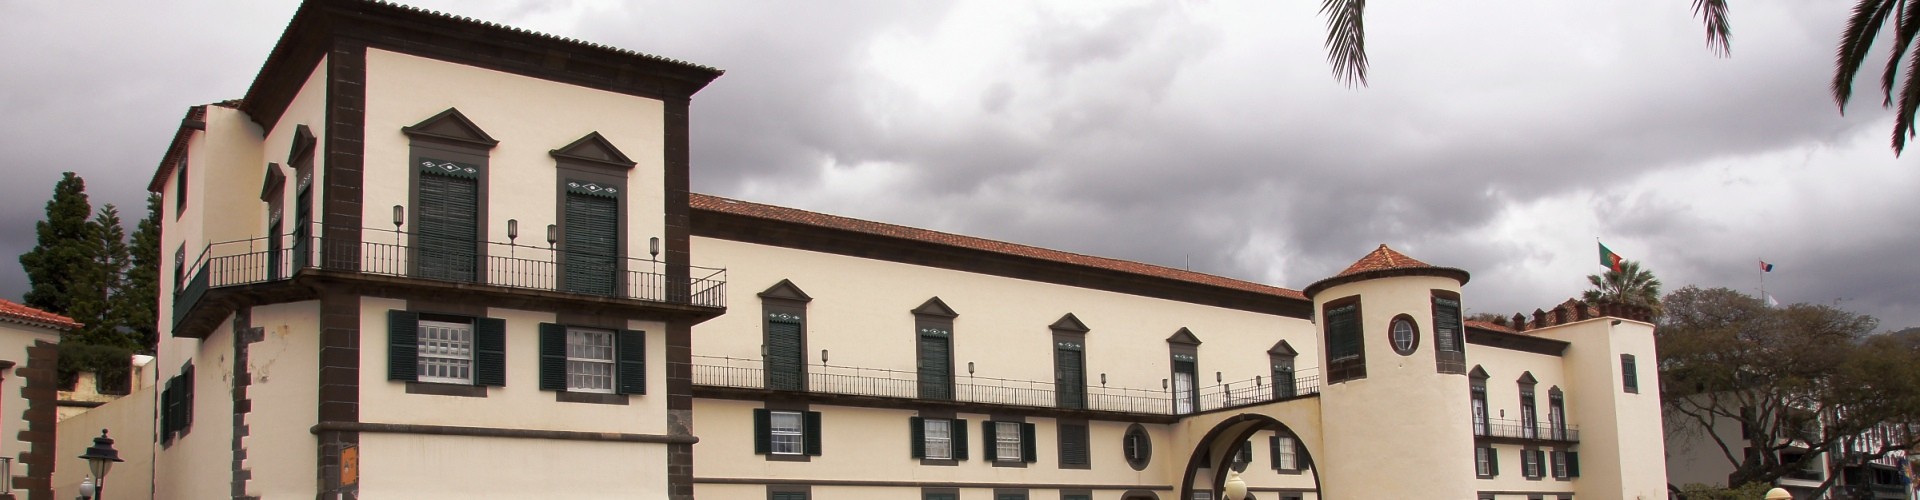 Museu Militar da Madeira Military Museum, Funchal